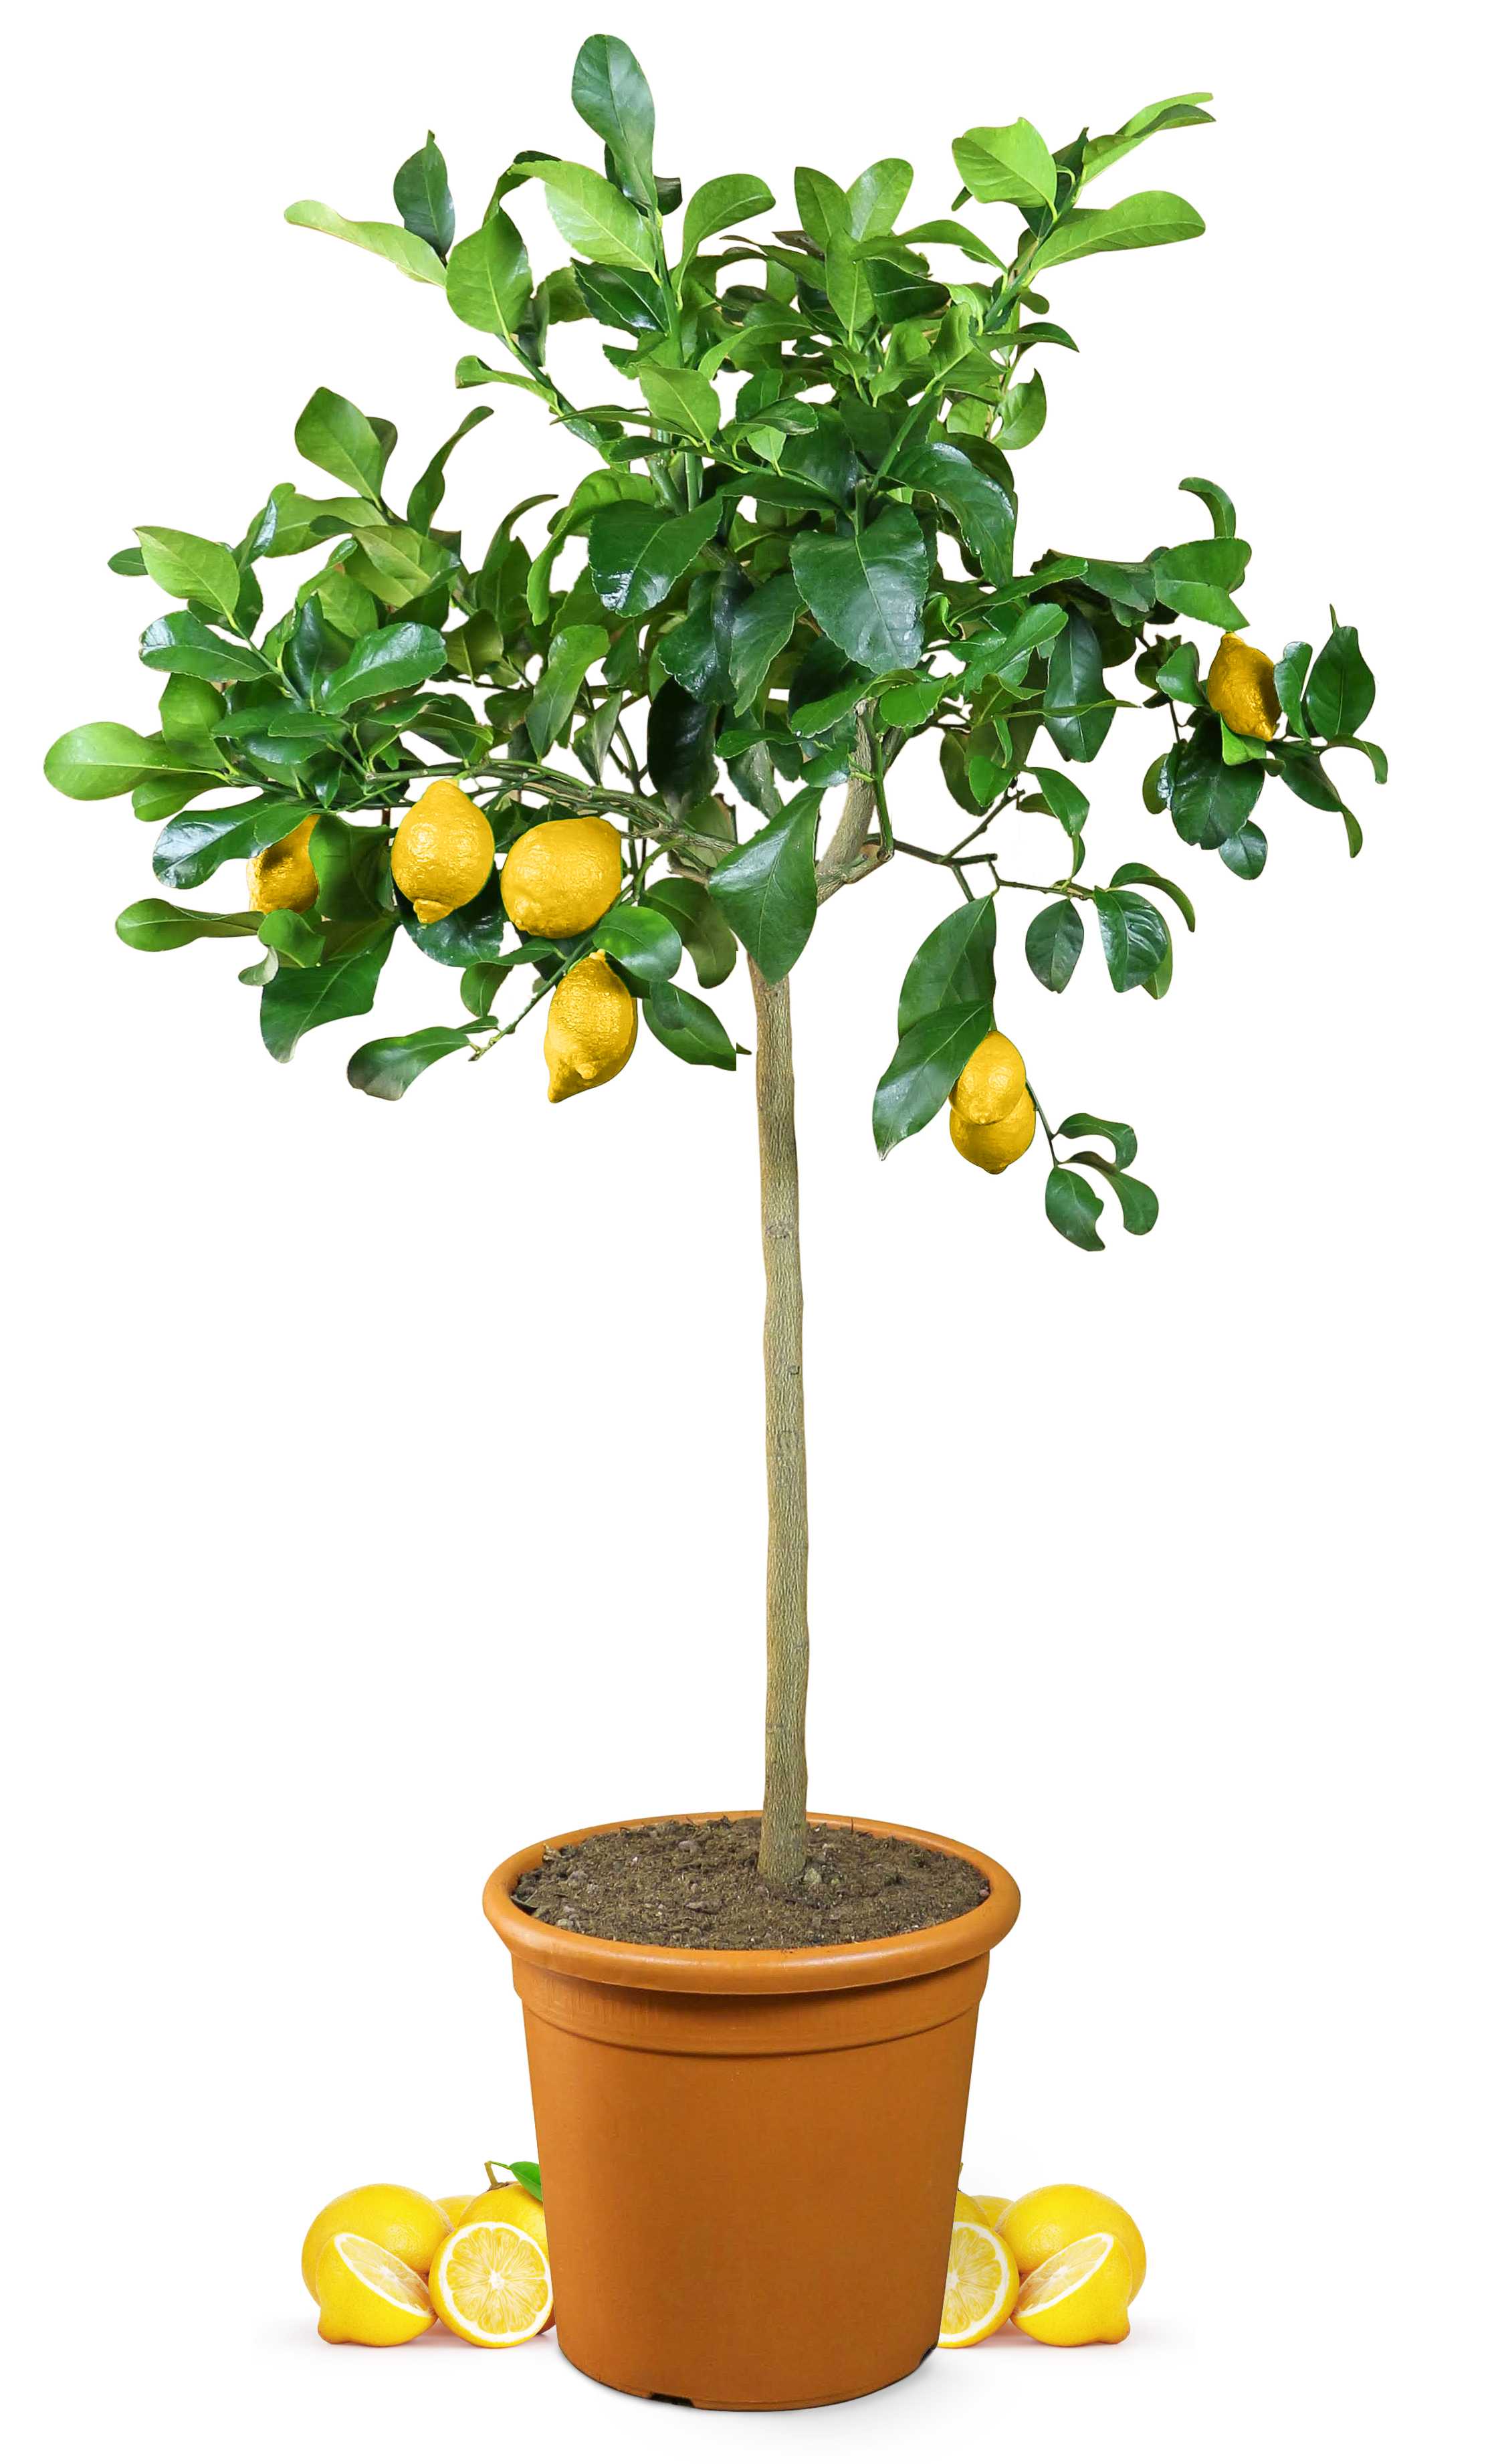 Zitronenbaum [GRANDE] - Citrus limon - echte Zitrone